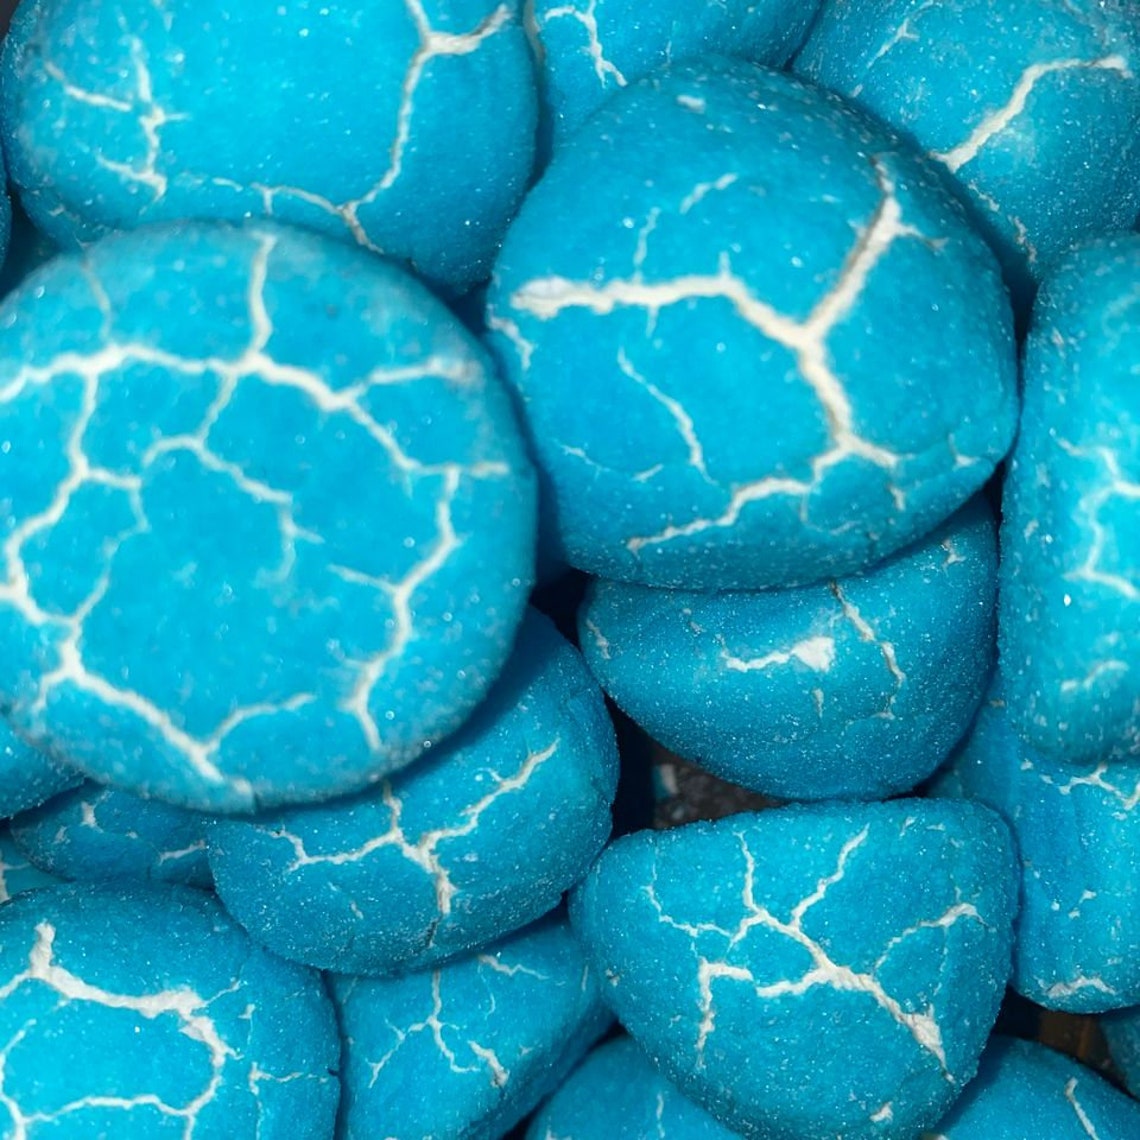 Blue Paint Balls  - Freeze Dried Sweets